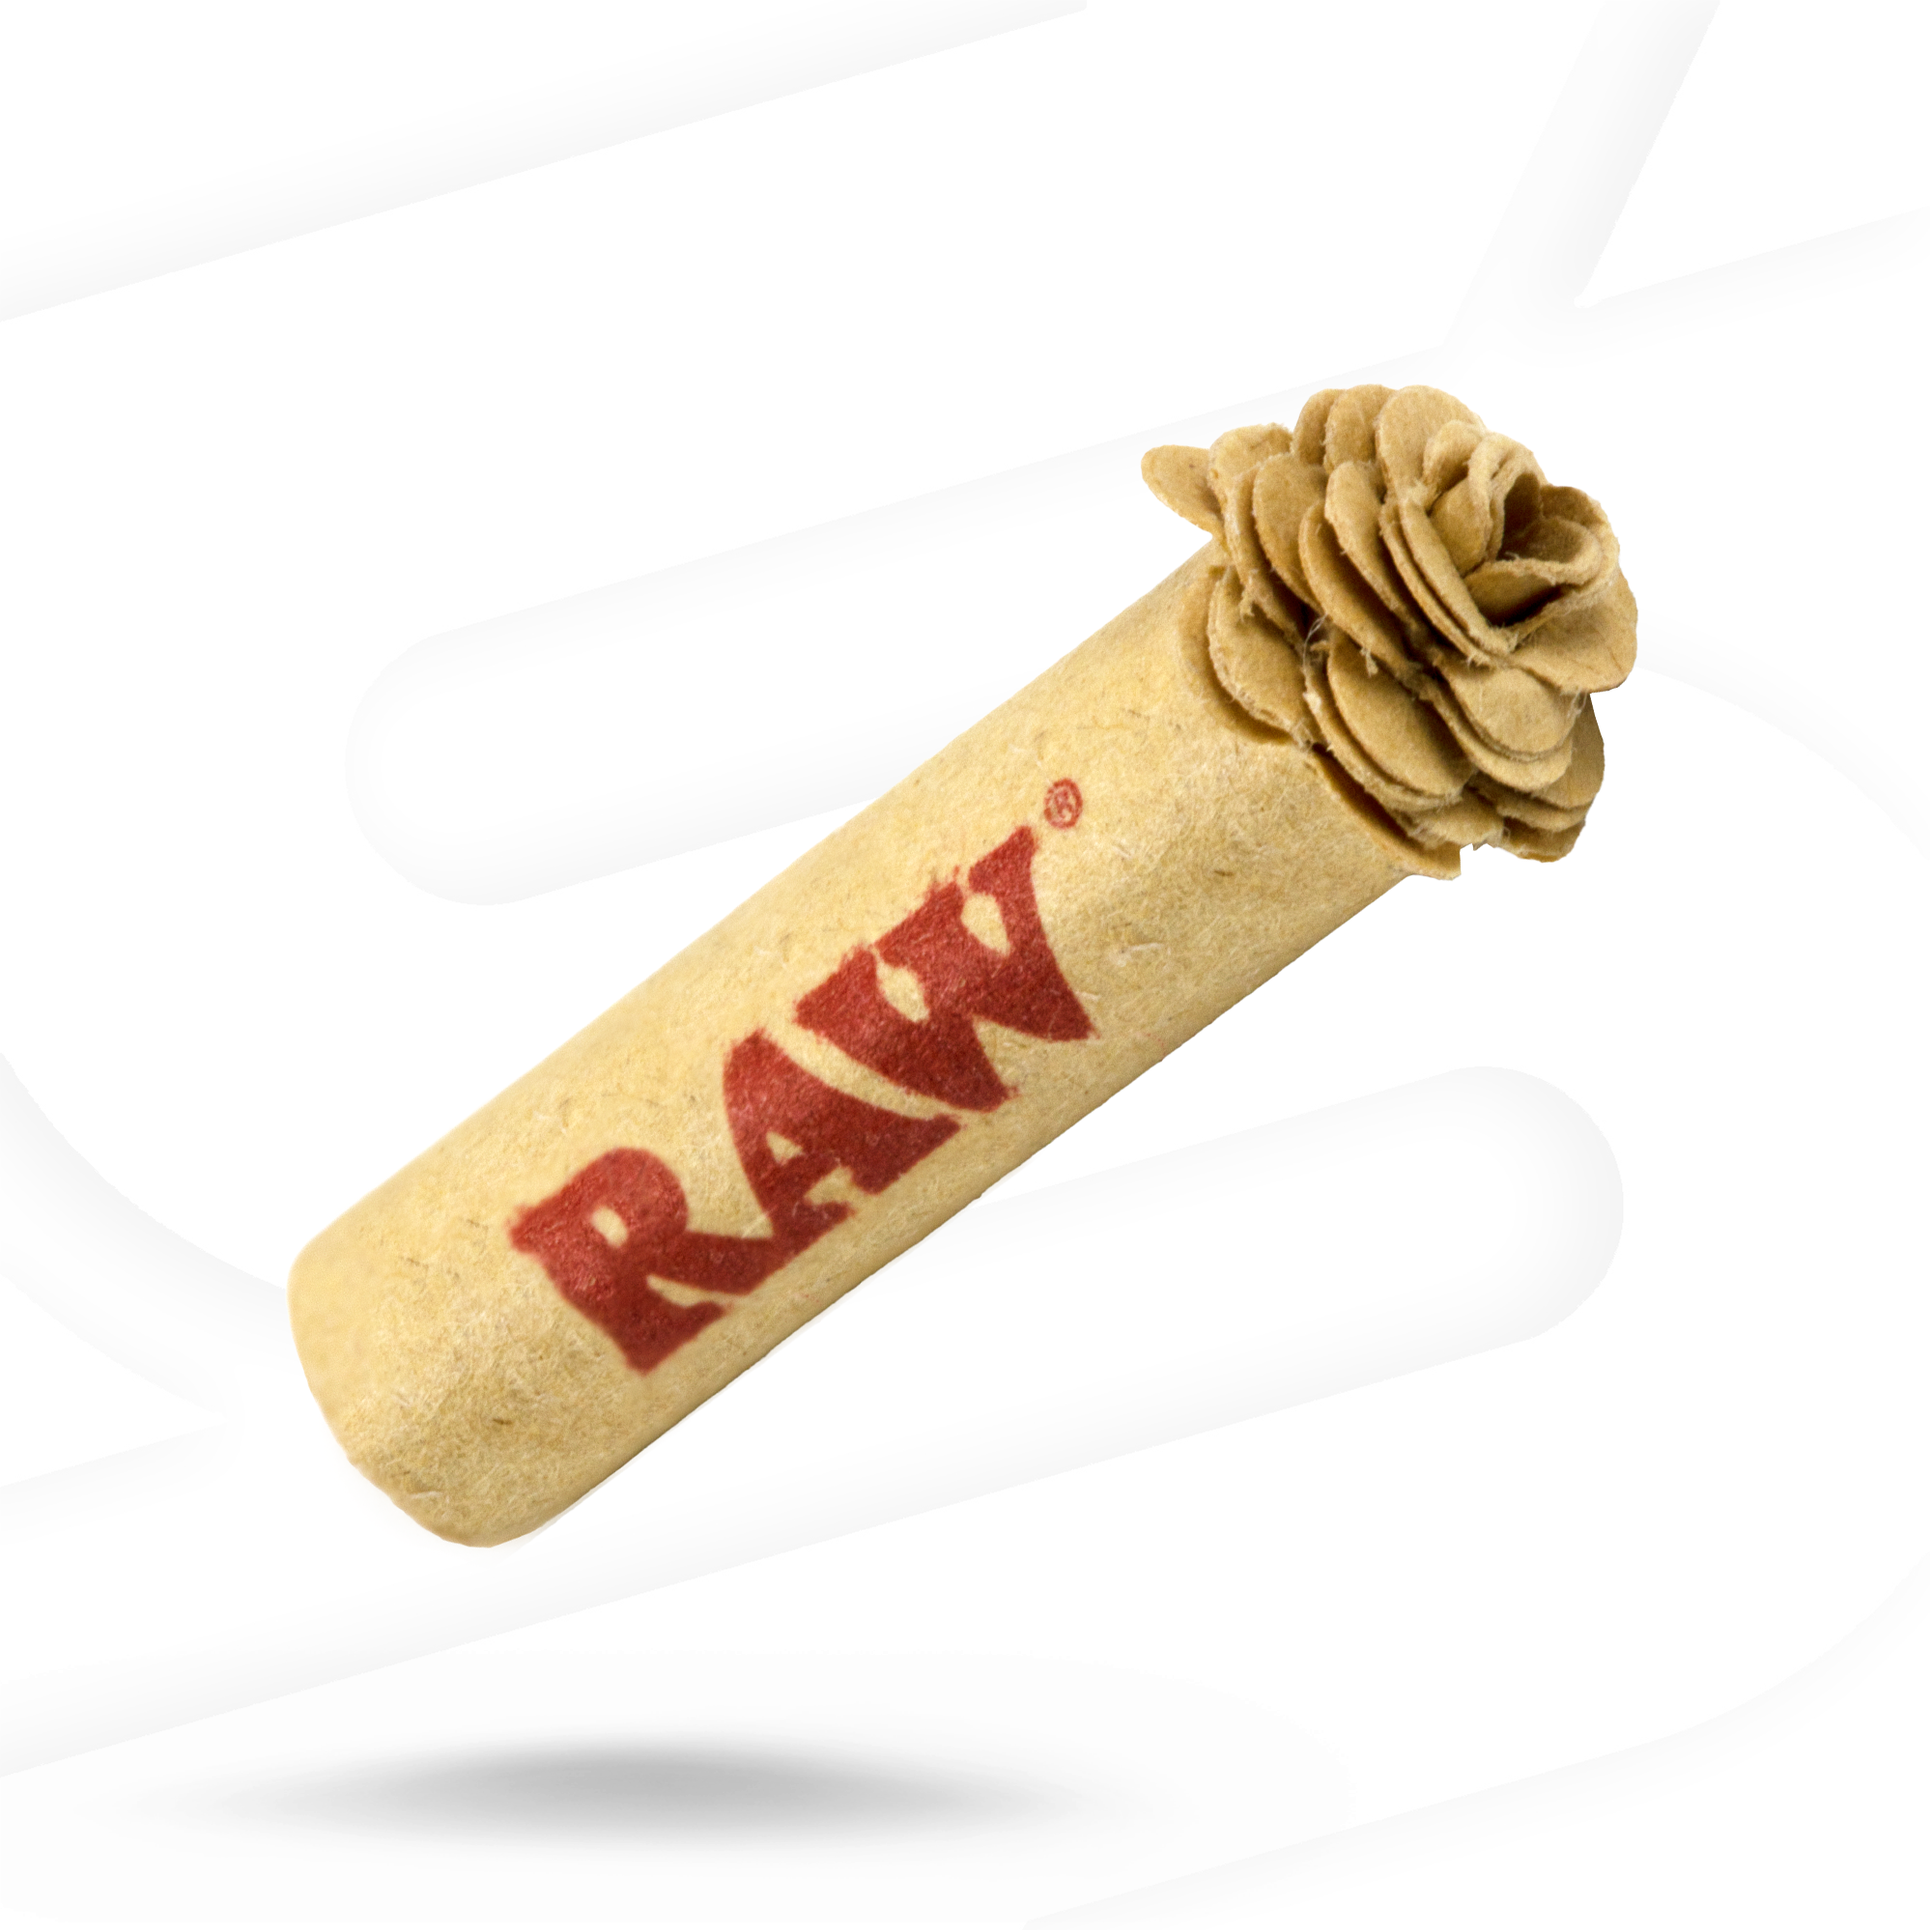 Filtres Pré-Roulés carton Rose tips - Raw